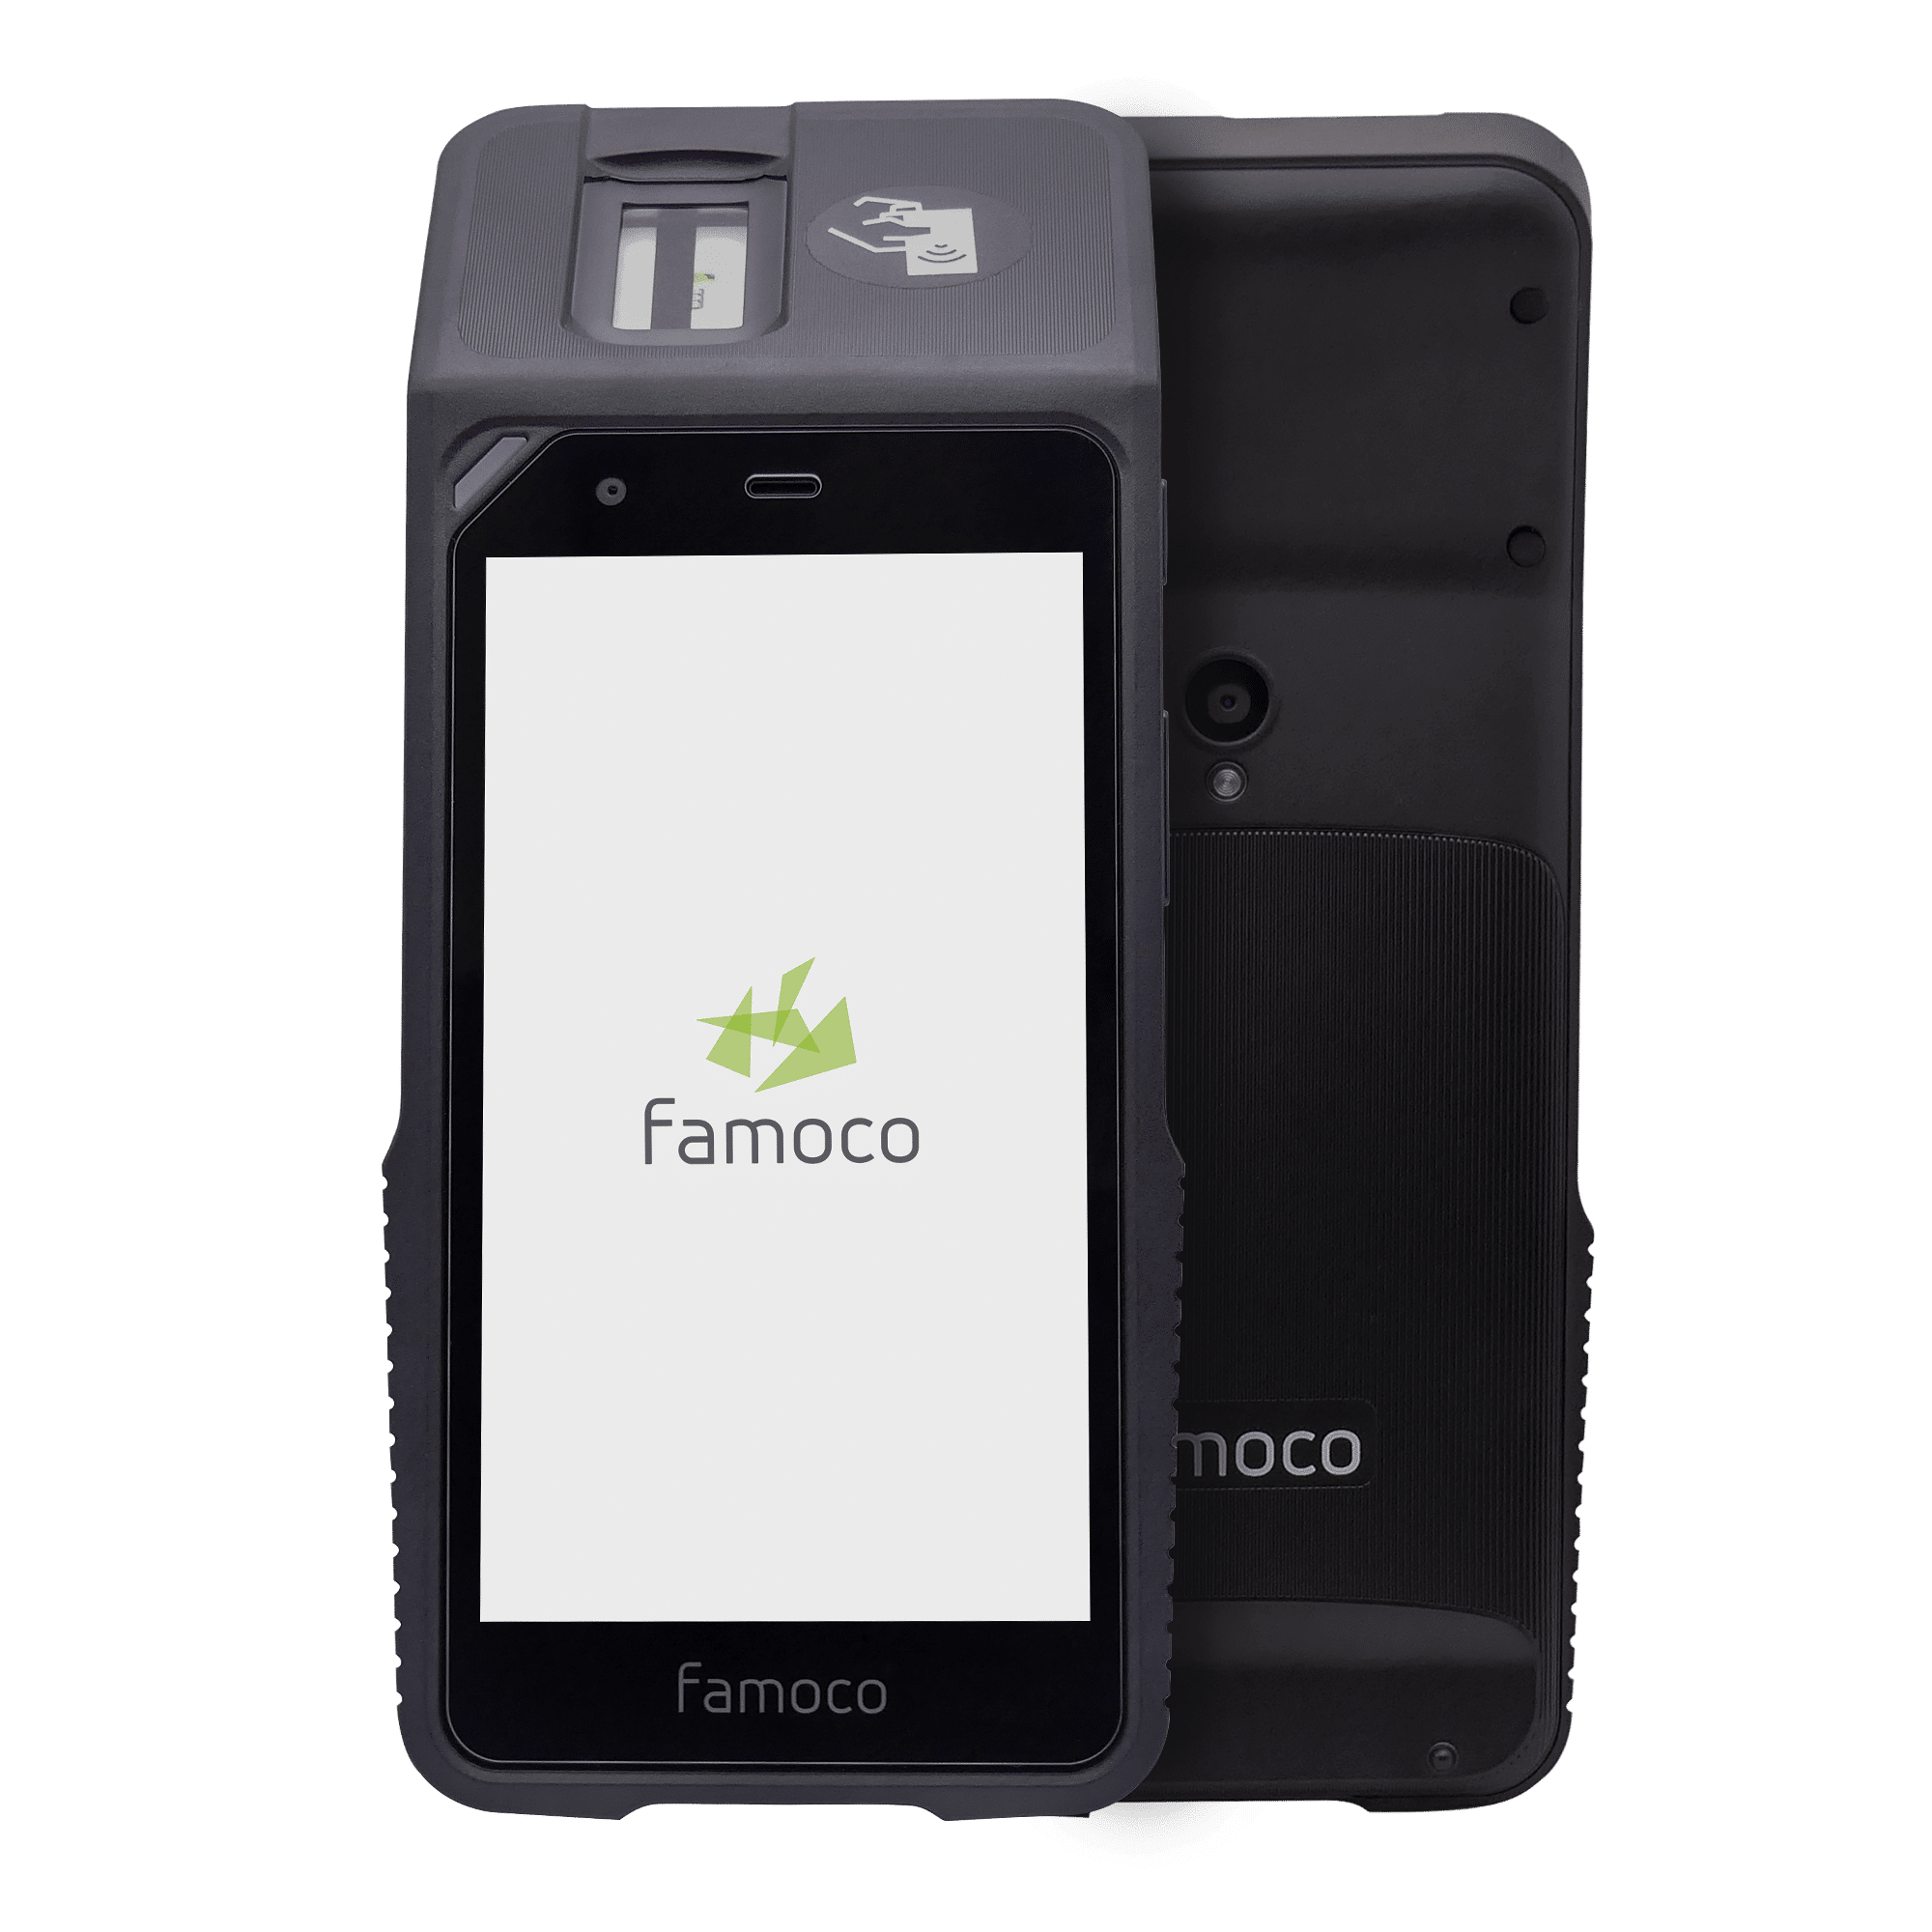 New in Famoco MDM : Introducing Smart Selection - Famoco